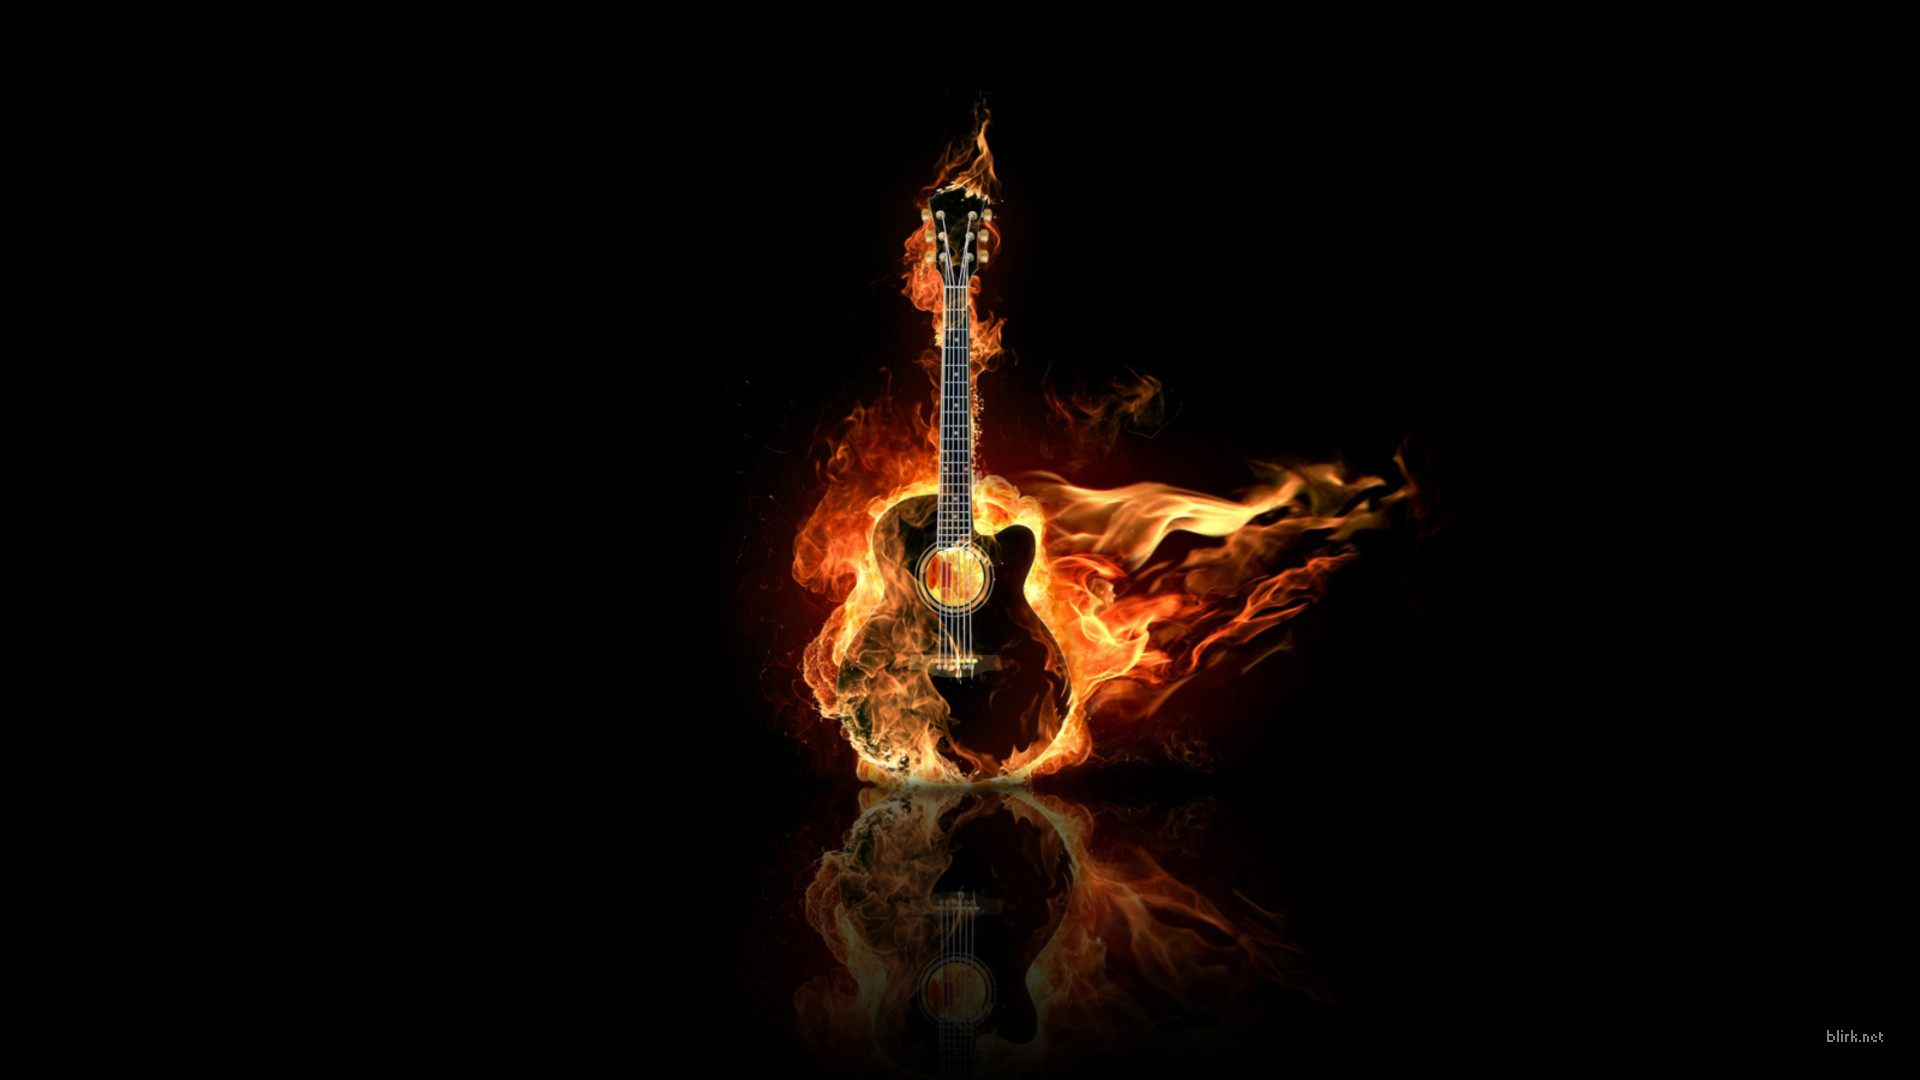 Guitar Art Of Fire Guitar Wallpaper For Desktop and Mobile